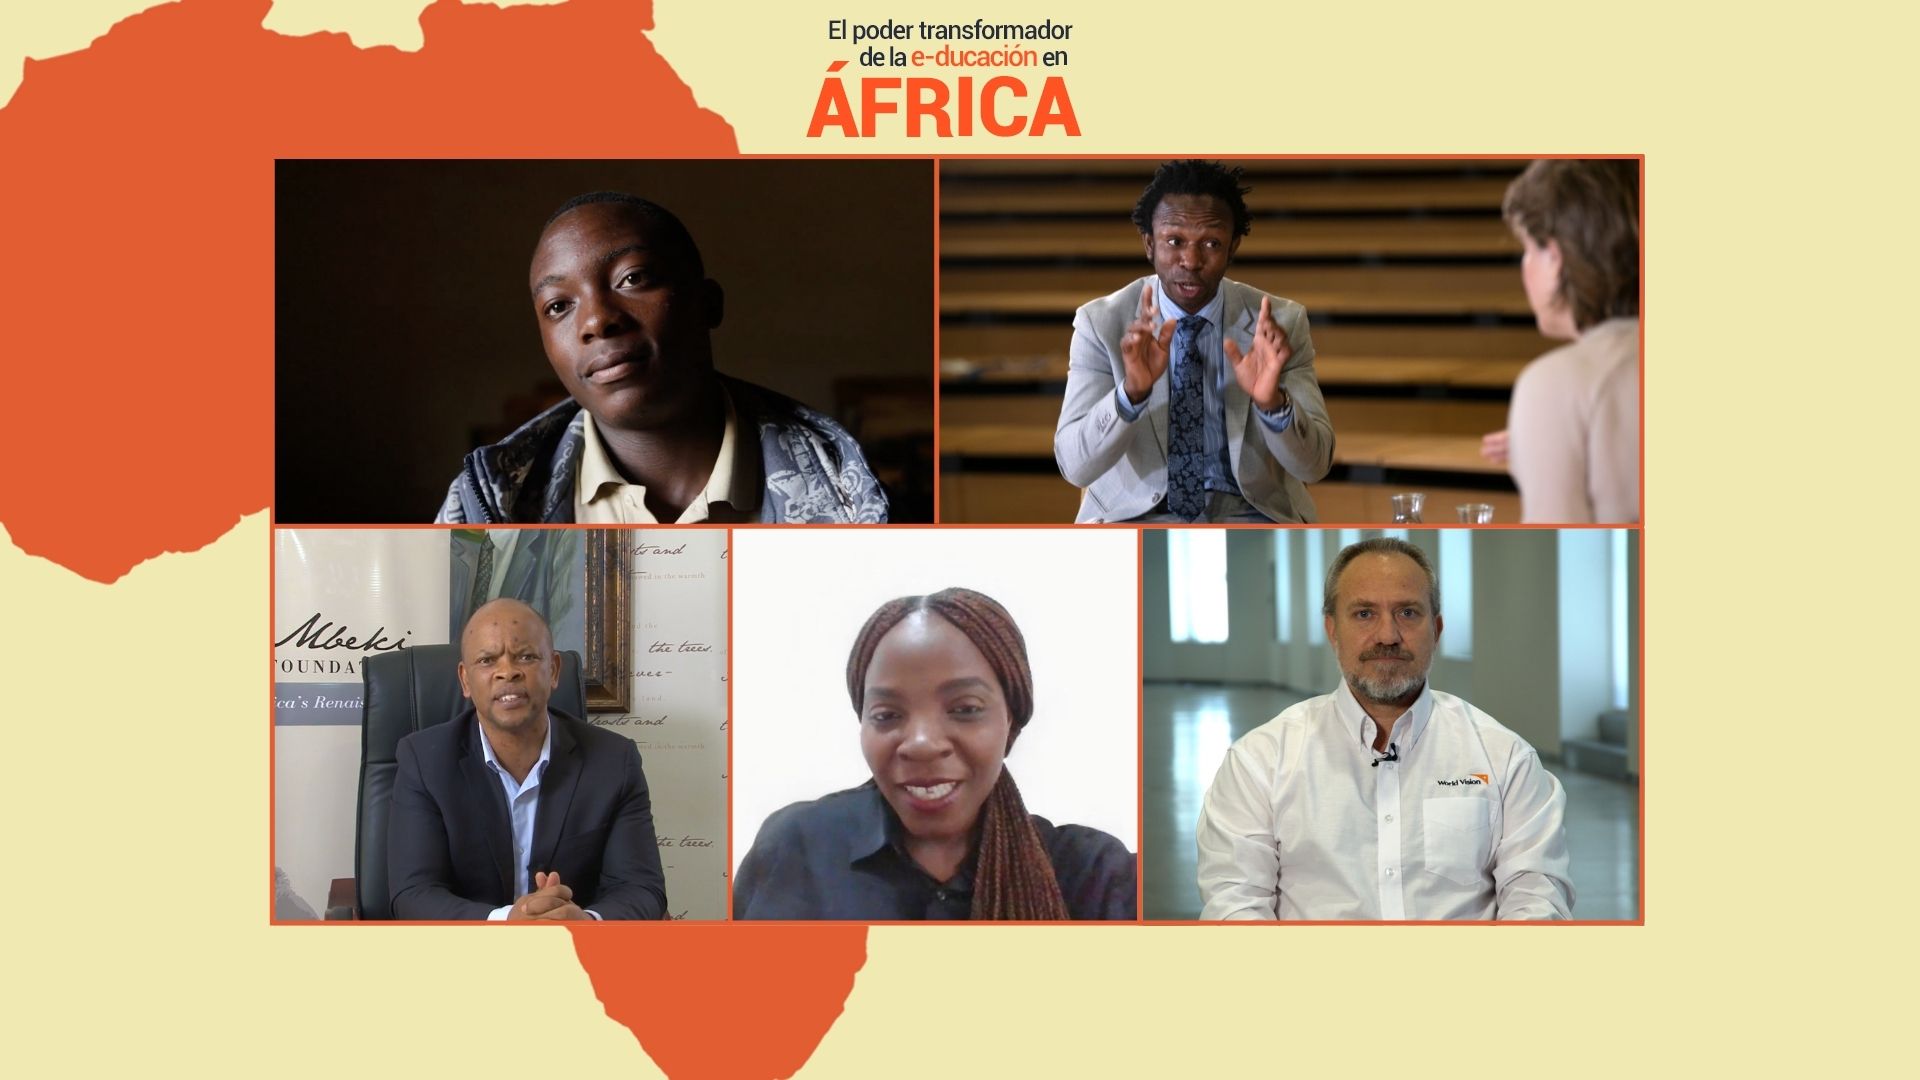 5 talks to understand Africa through digital education